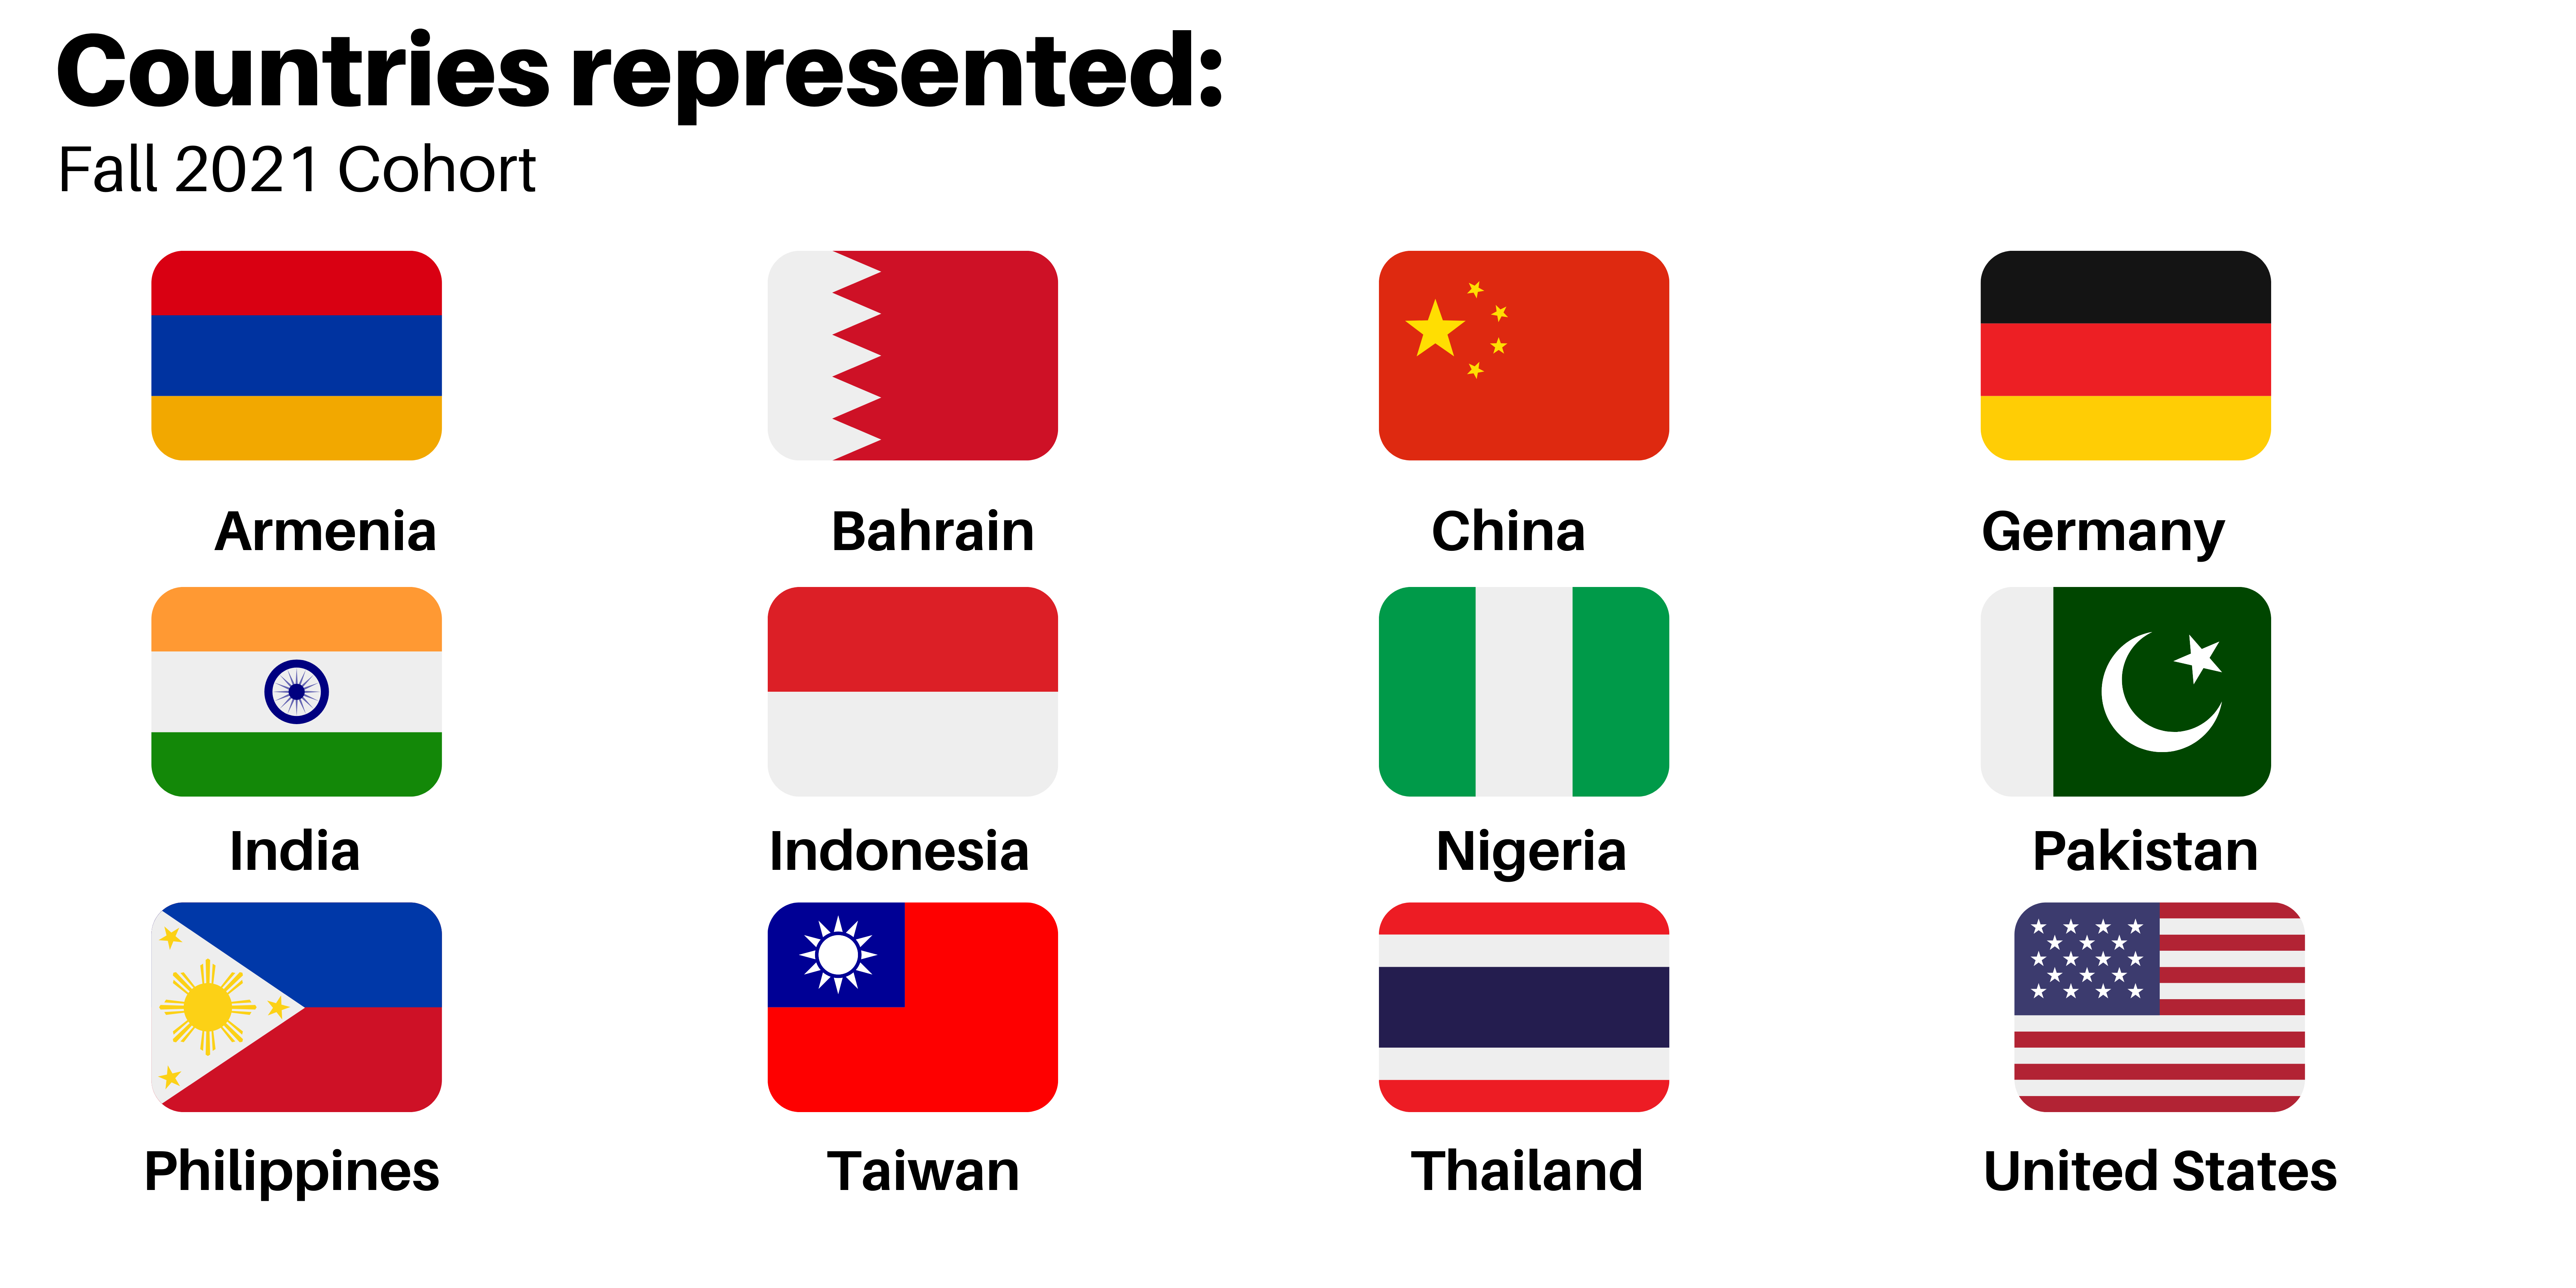 Countries represented include: Armenia, Bahrain, China, Germany, India, Indonesia, Nigeria, Pakistan, Philippines, Taiwan, Thailand, United States